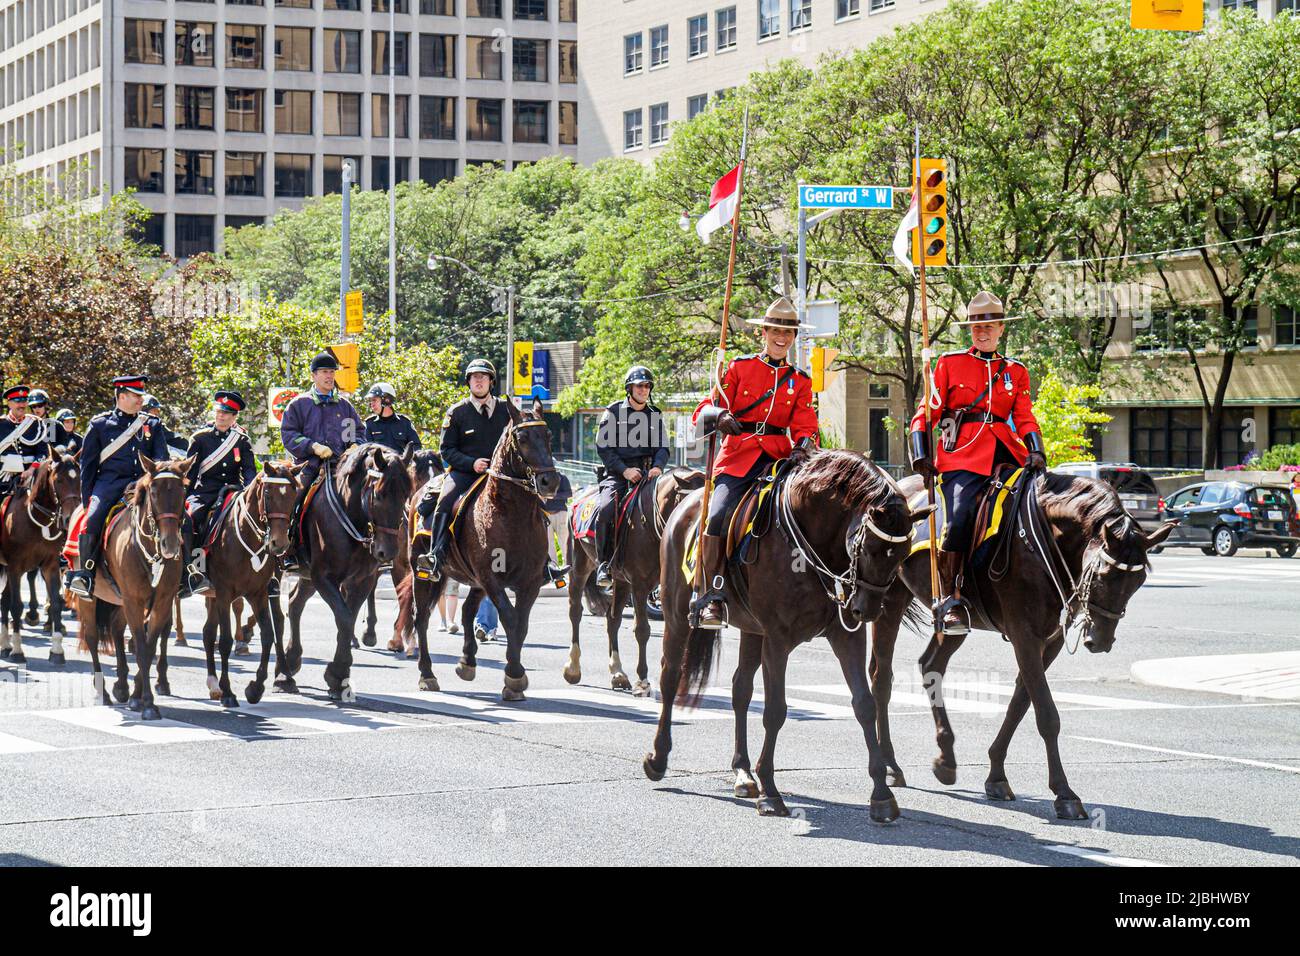 Toronto Canadá,University Avenue,Police Equestrian Day,Royal Canadian Mounted Police,Mounties,caballos desfile equipo oficiales hombres uniformes masculinos Foto de stock